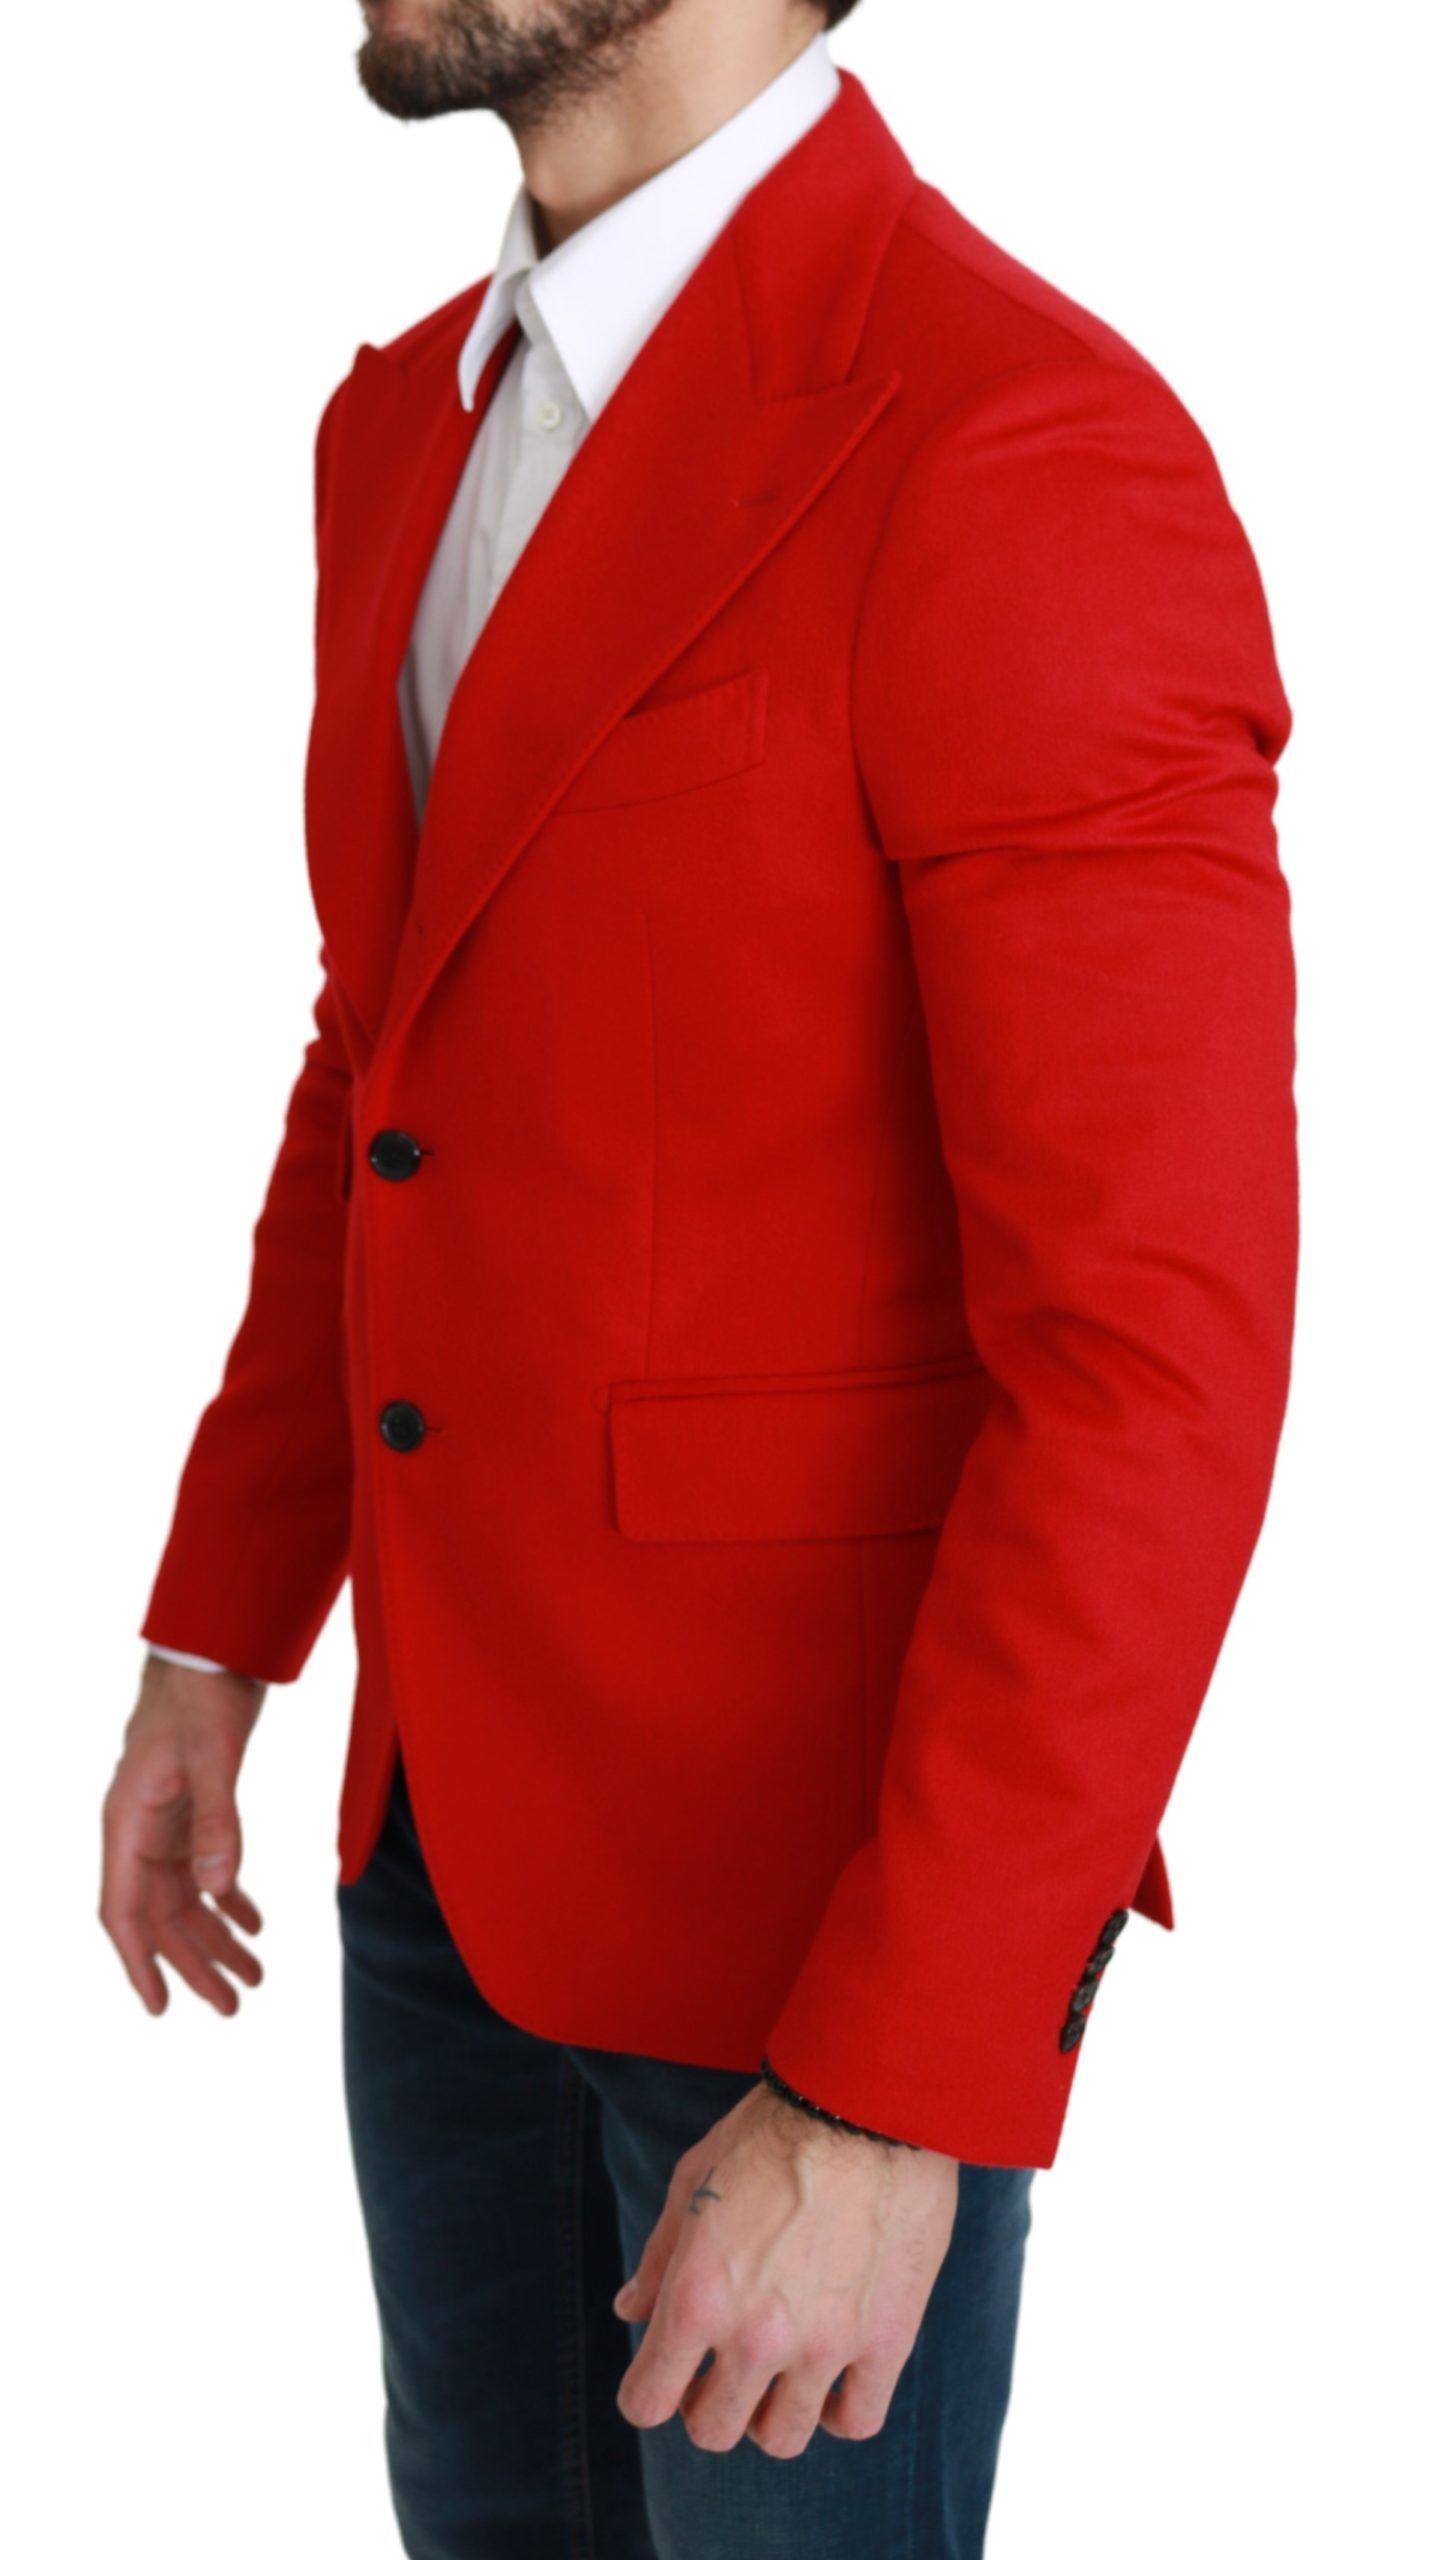 Red Cashmere Slim Fit Coat Jacket Blazer